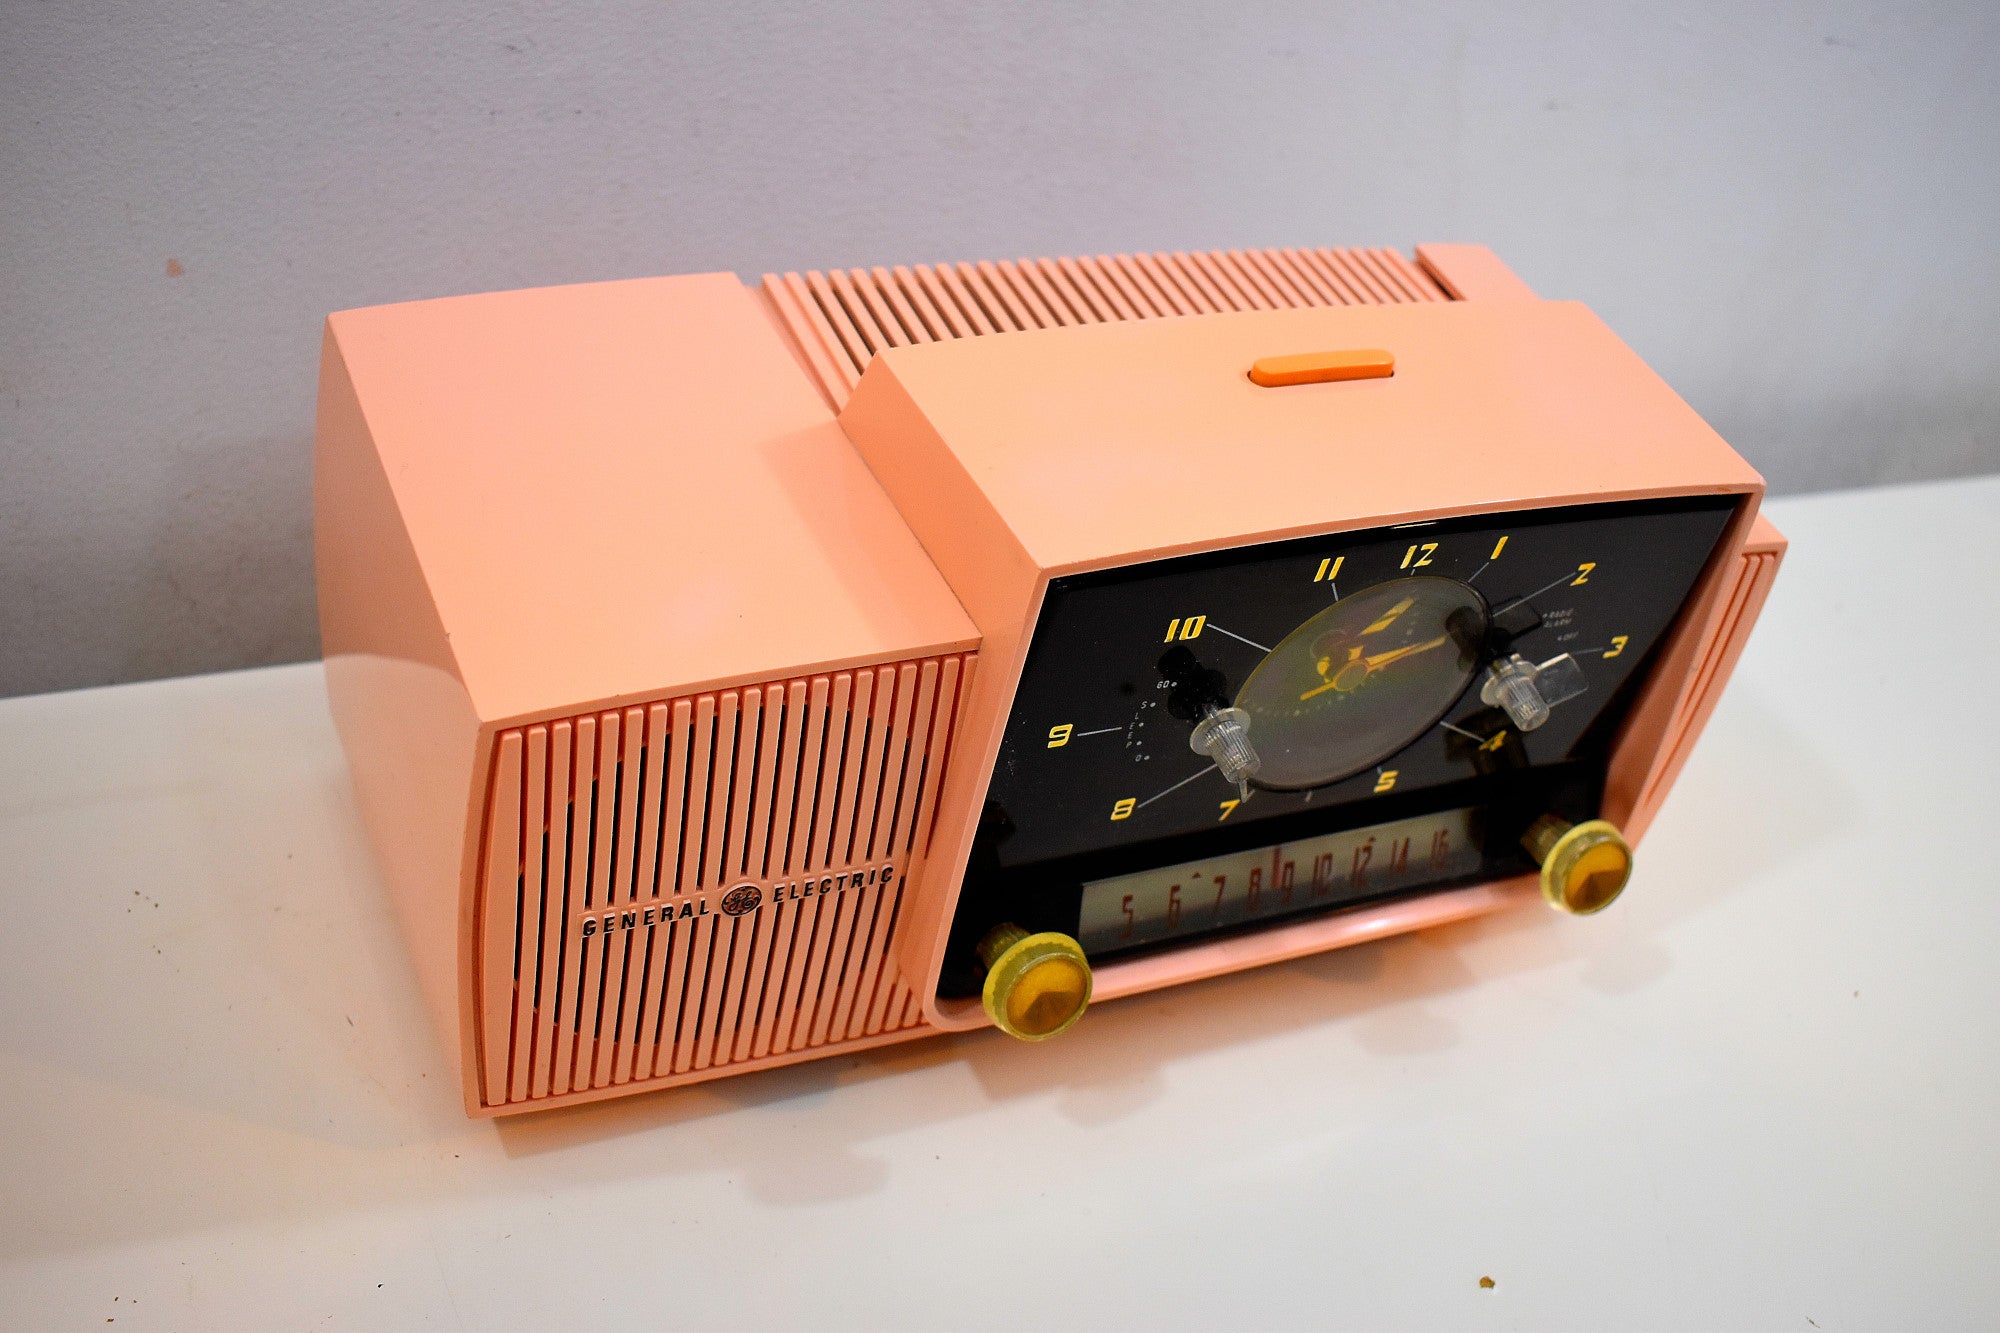 GENEAL ジェネラルエレクトリック アメリカ　ラジオ1960年代　ビンテージサイズ32X18X14